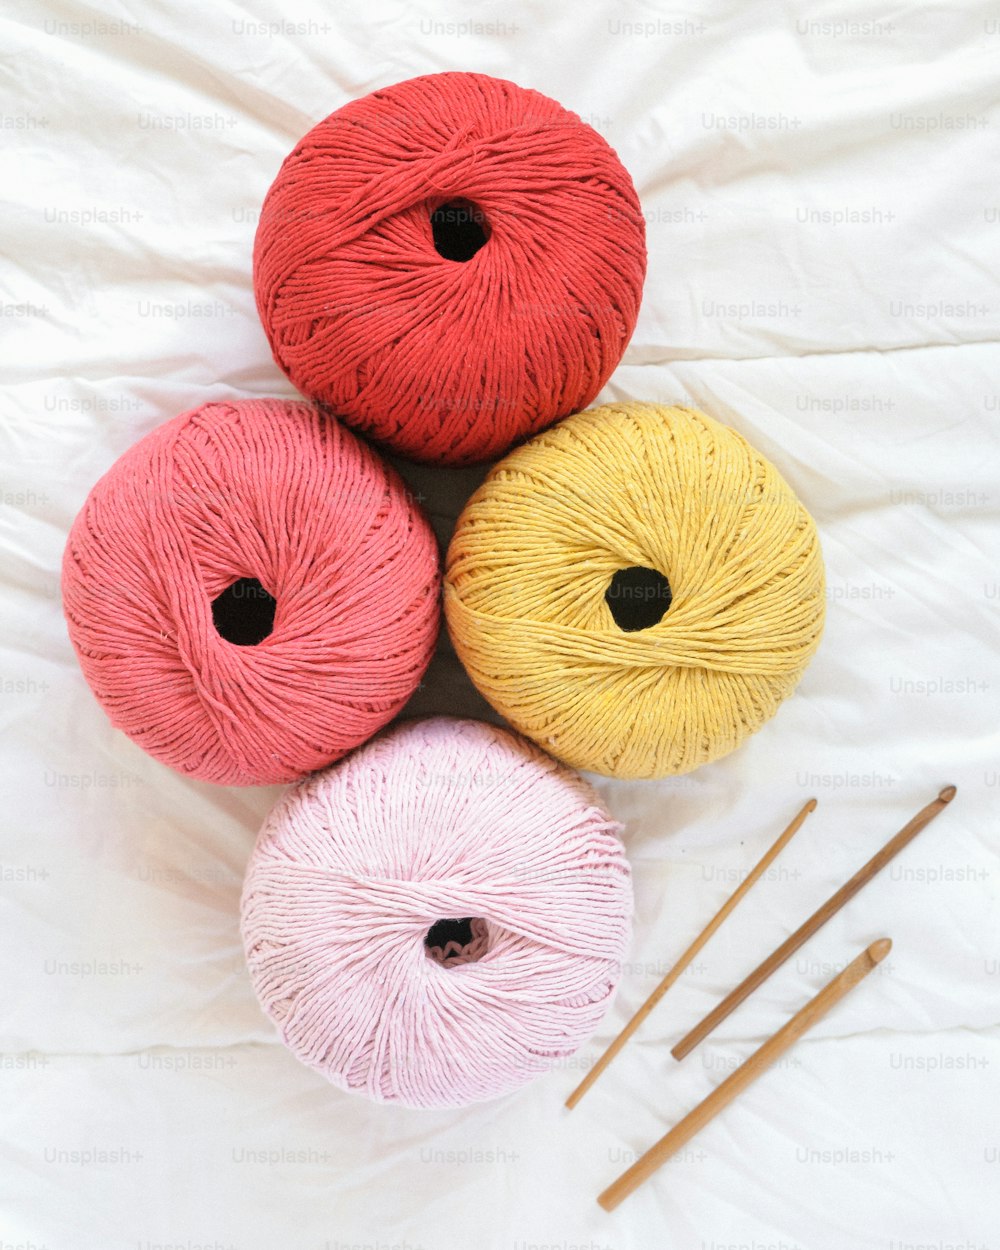 three balls of yarn and knitting needles on a white sheet